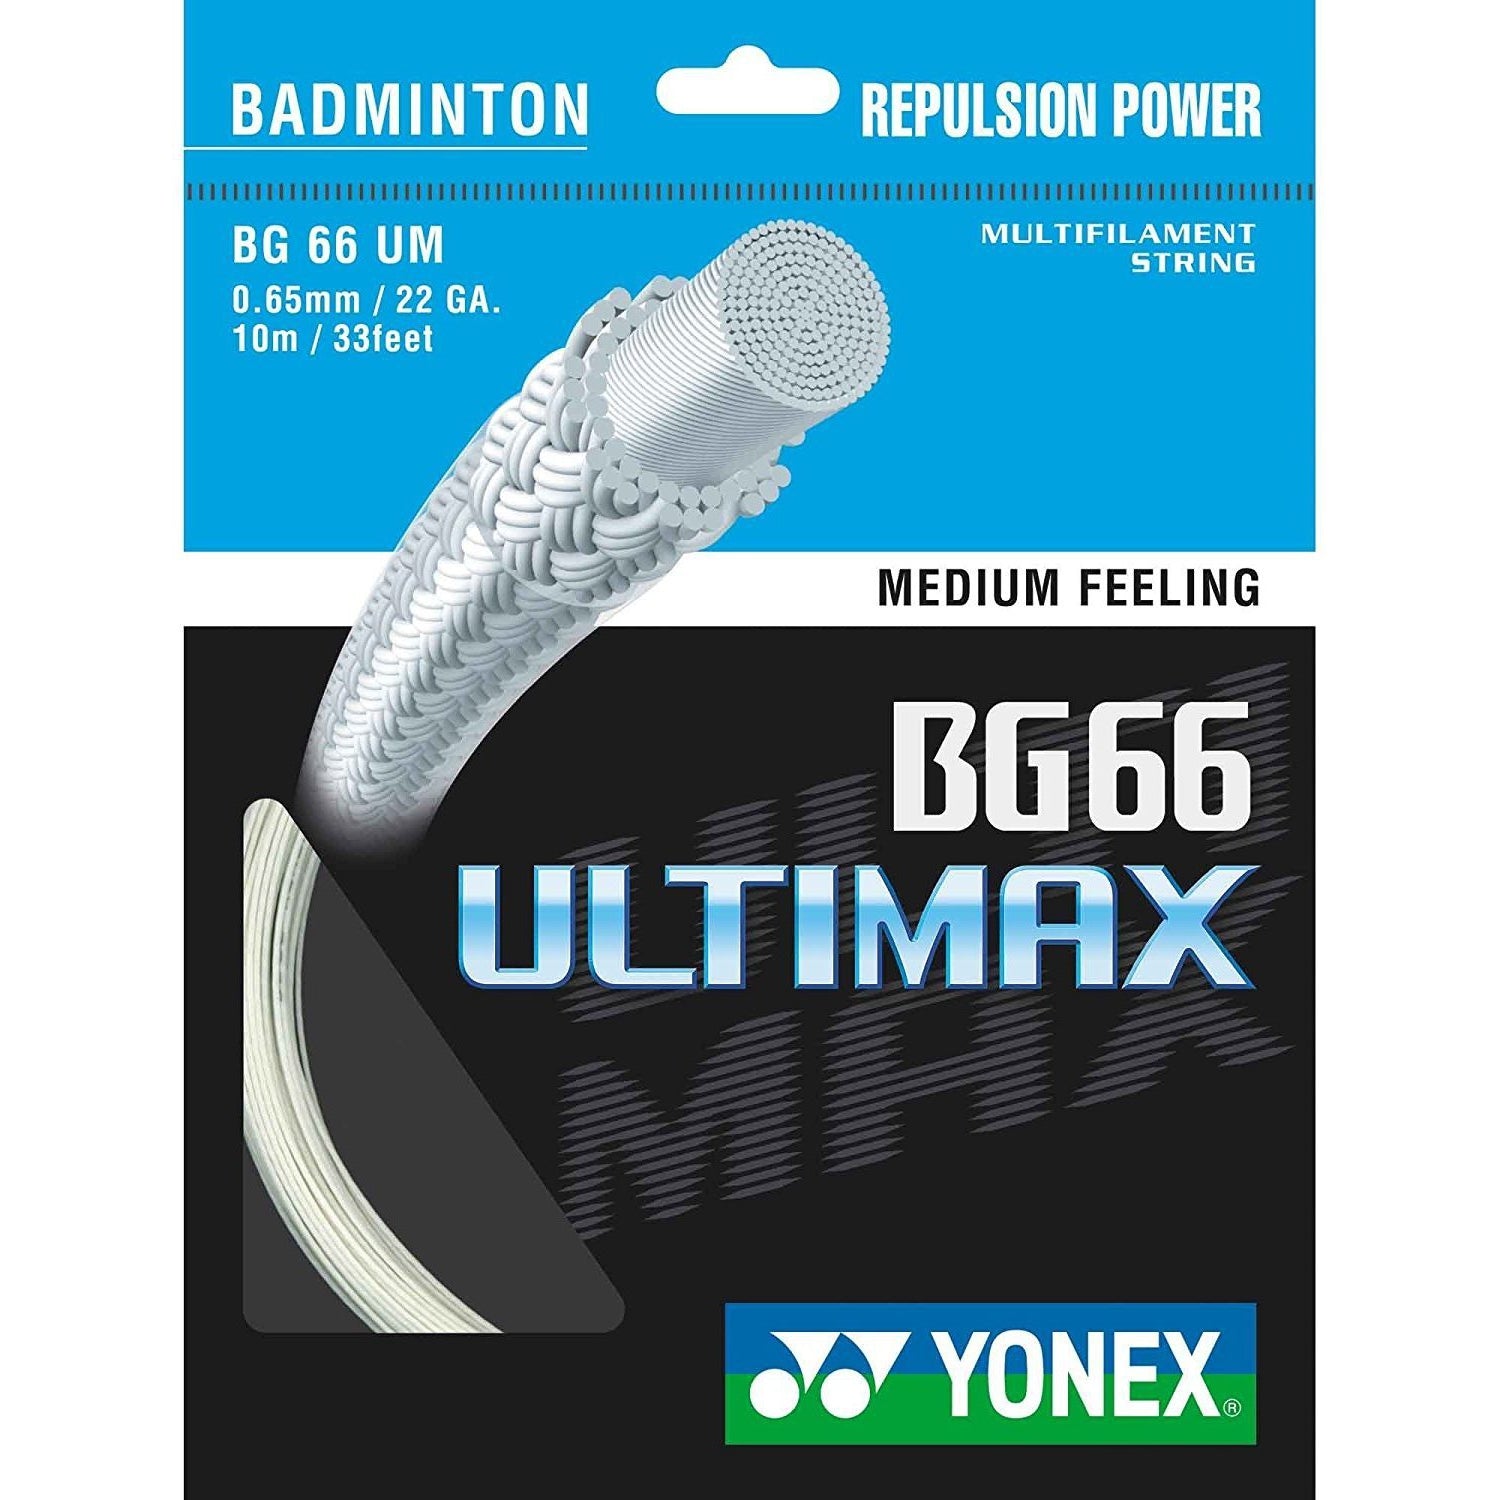 Yonex BG66 Ultimax Badminton String - atr-sports